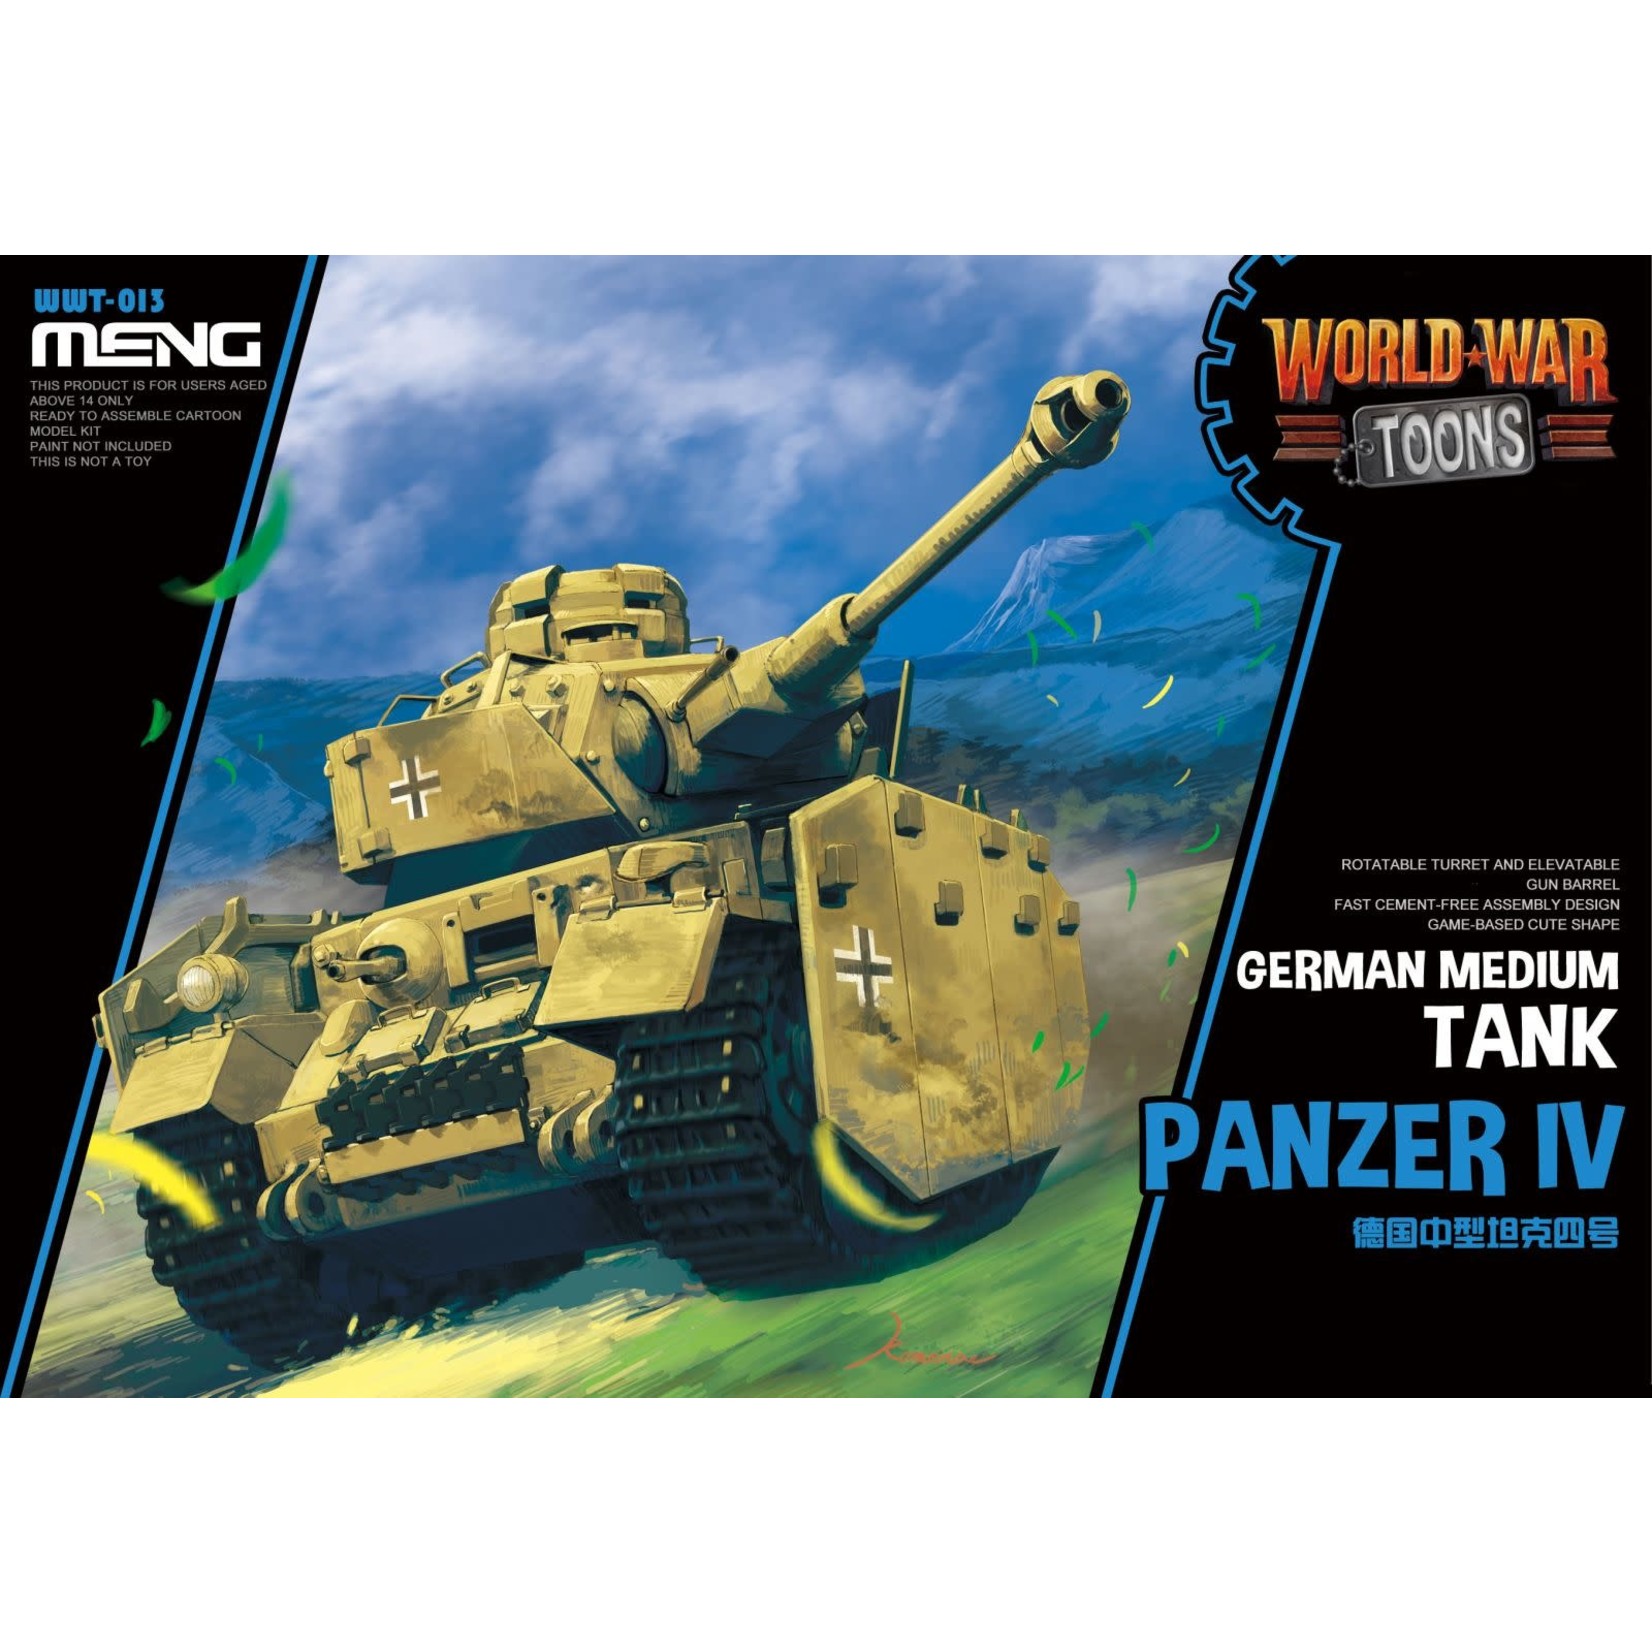 MENG MENGWWT013 German Medium Tank Panzer IV World War Toons